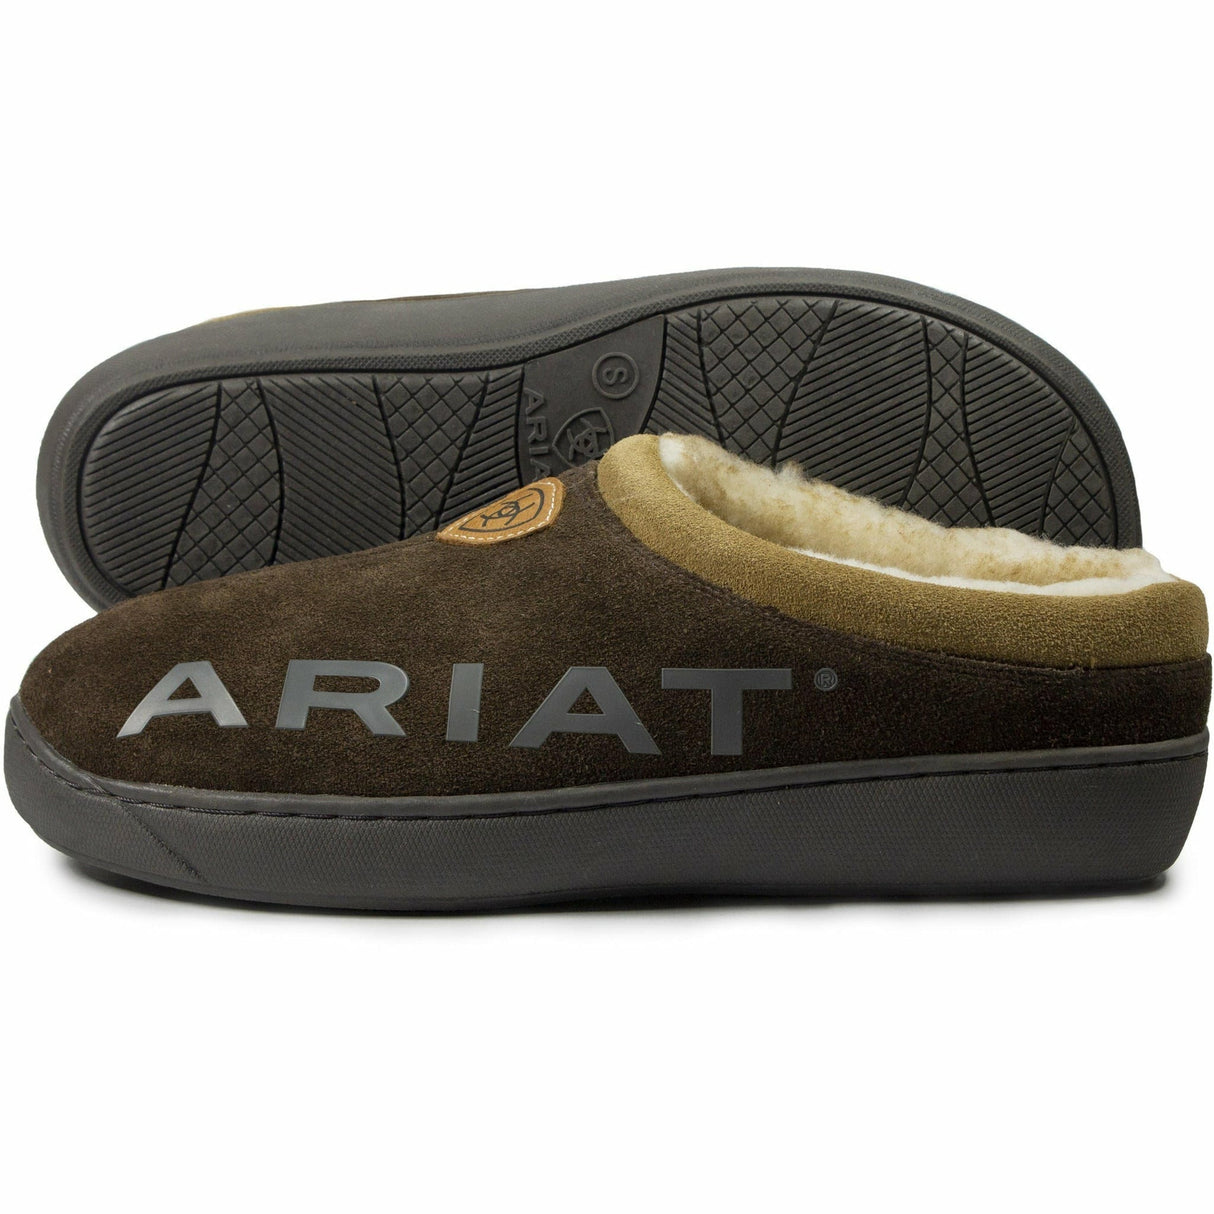 Ariat Mens Suede Clog w/ Ariat Logo Slippers  -  M9 / Chocolate